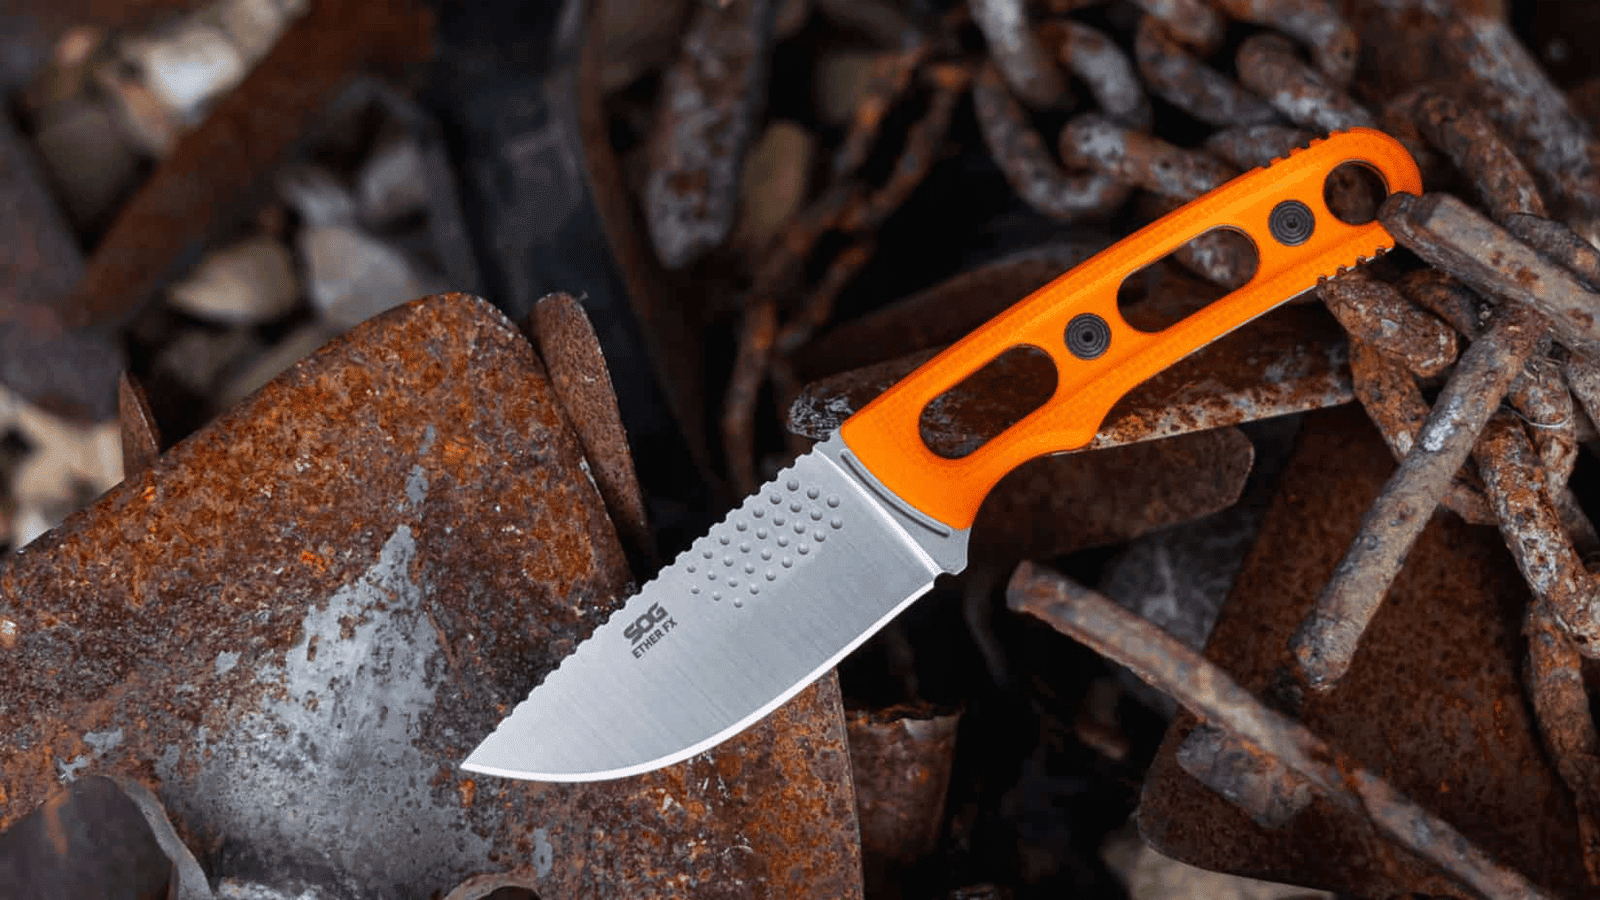 Serrated Pocket Knife Uses